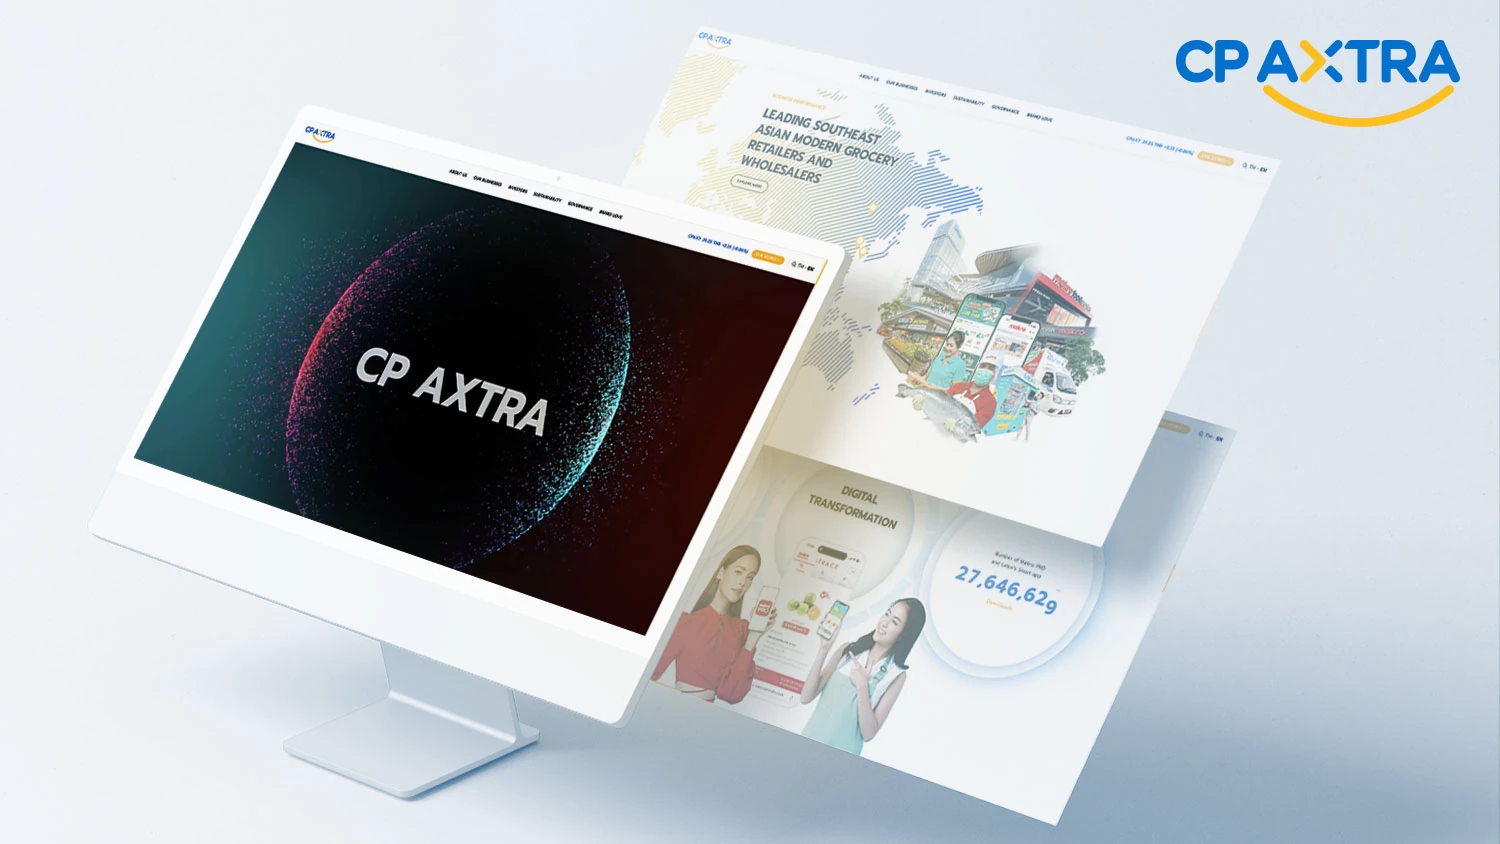 CP Axtra Public Company Limited